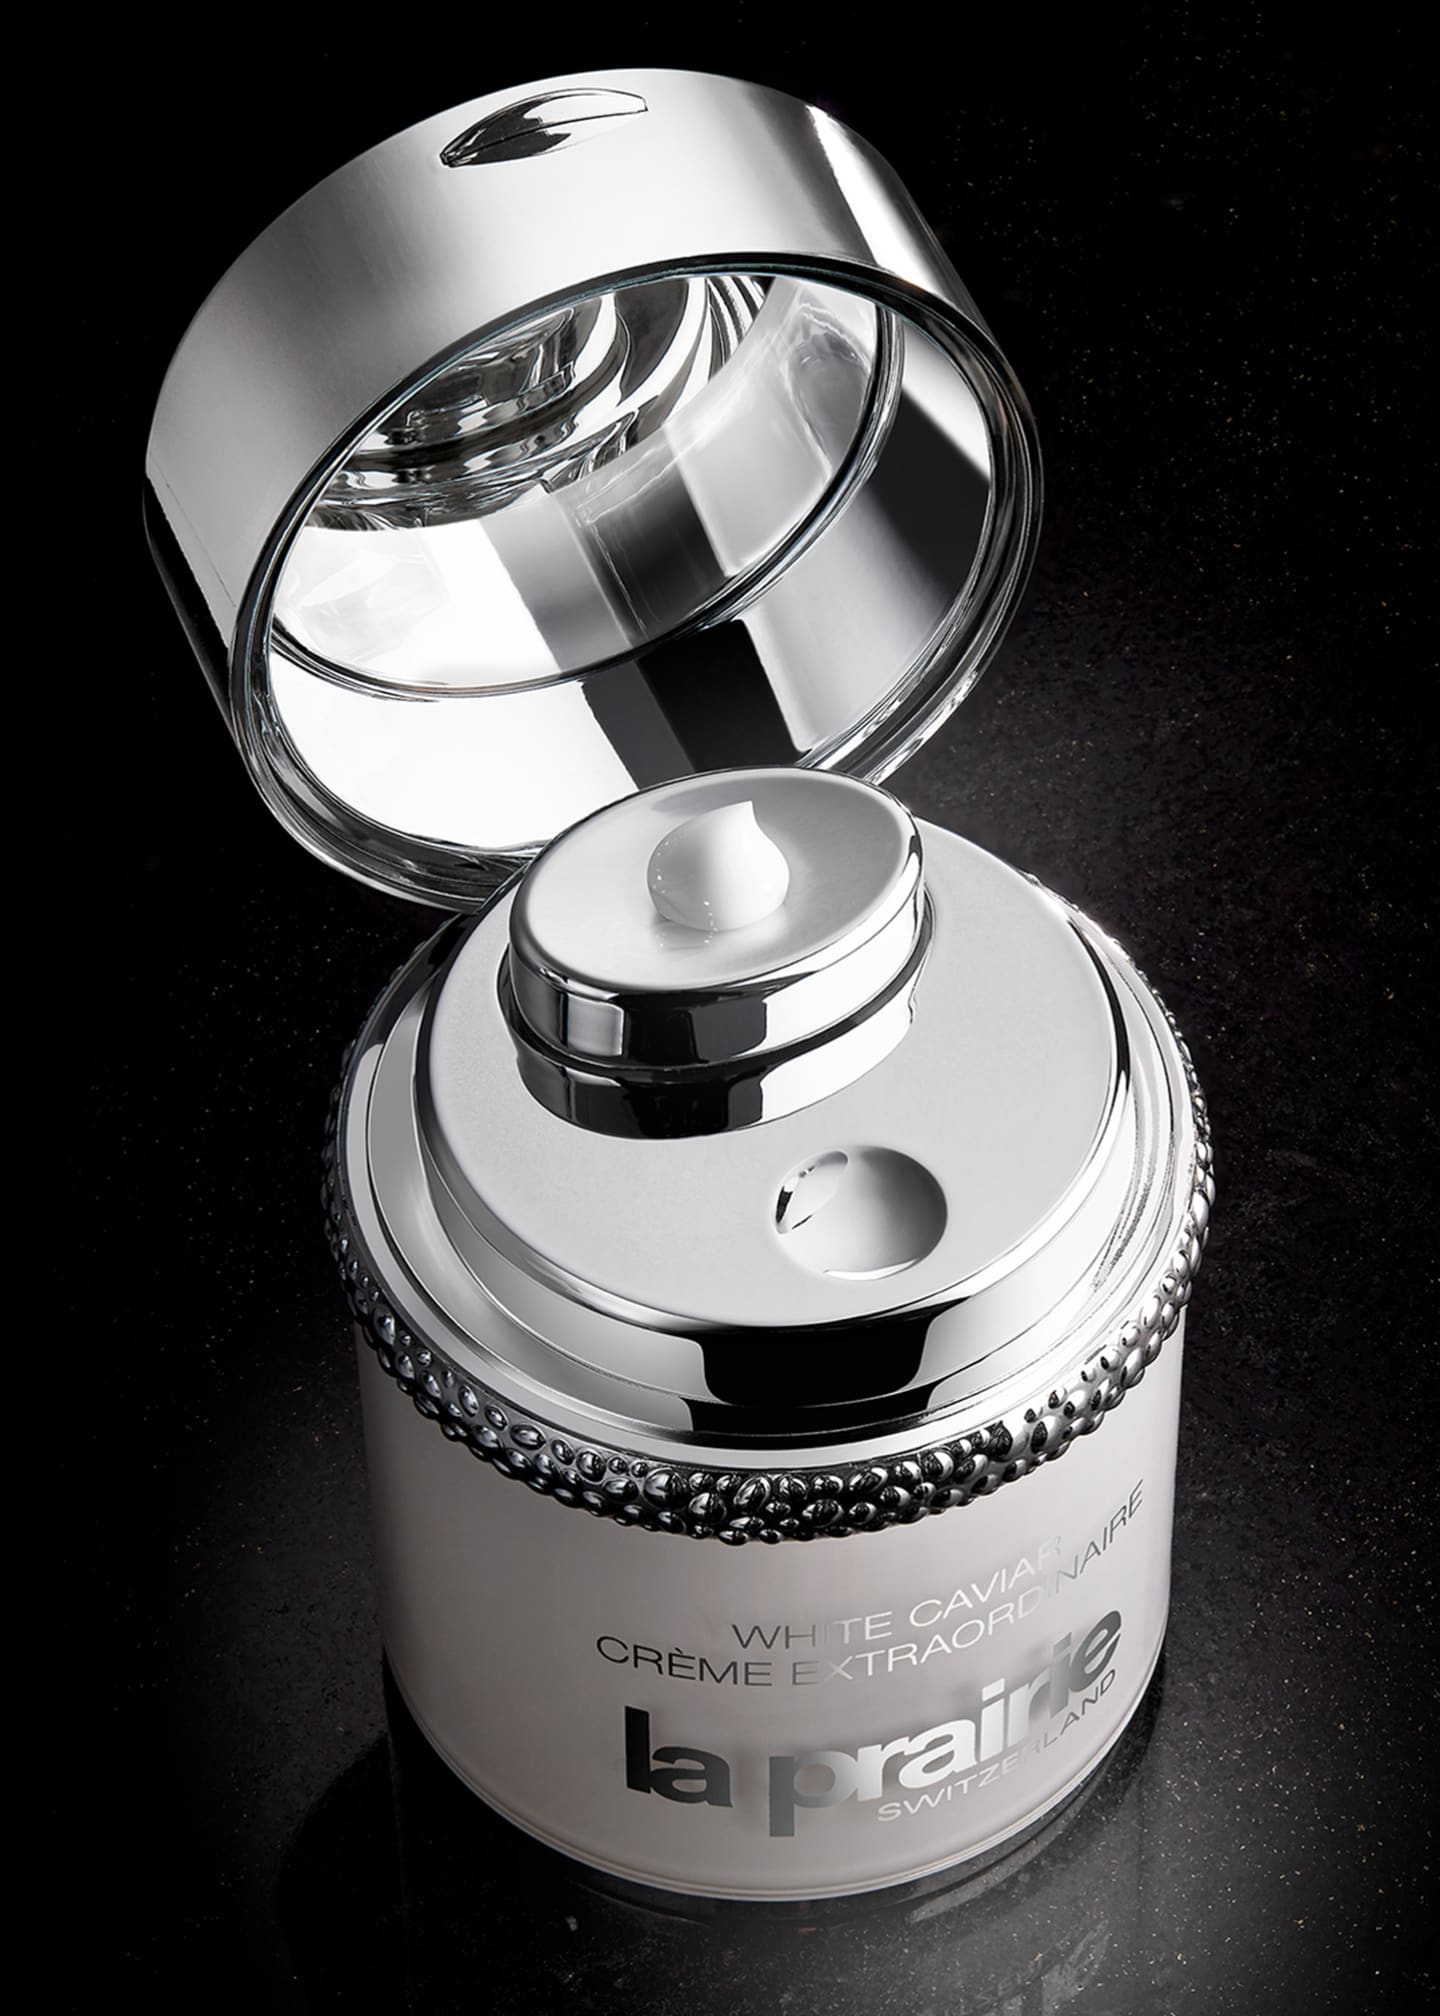 La Prairie 2 oz. White Caviar Creme Extraordinaire Illuminating Face Cream Image 3 of 4